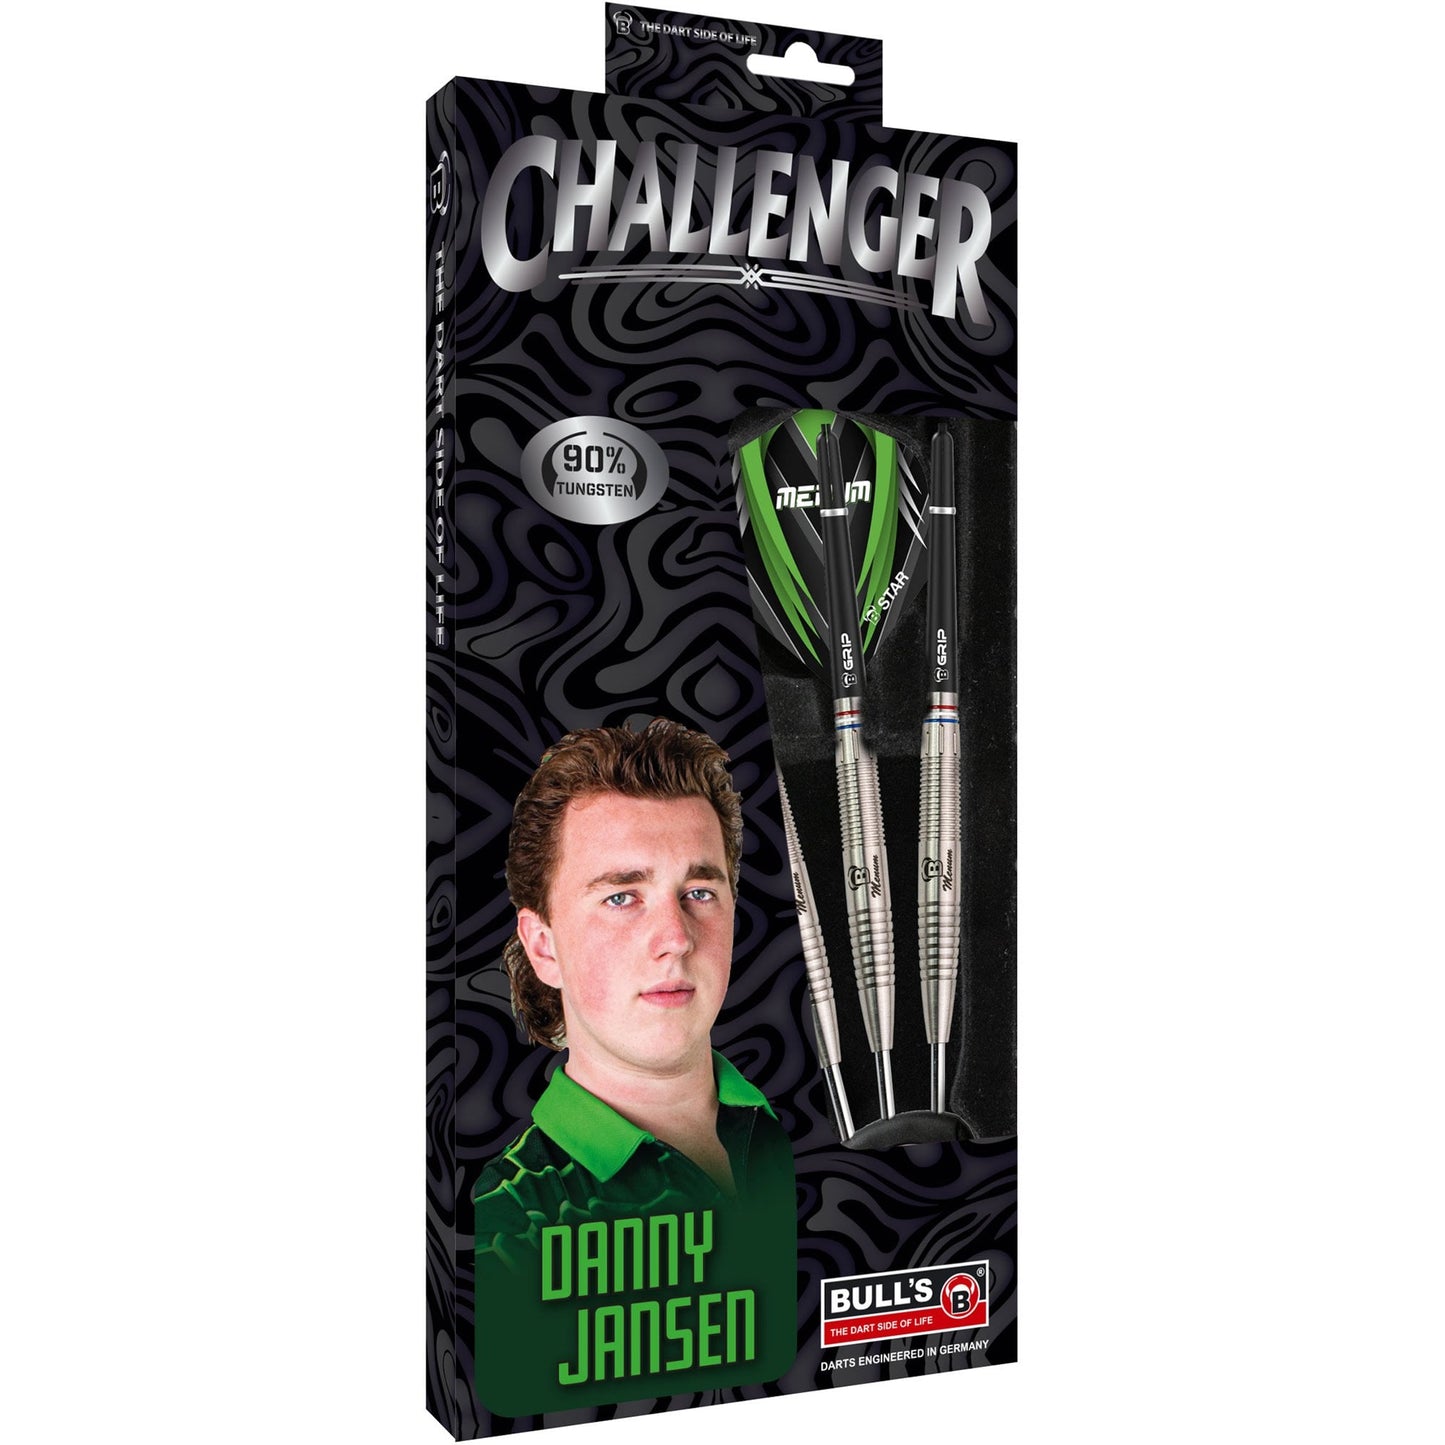 BULL'S Challenger Darts - Steel Tip - Danny Jansen - 26g